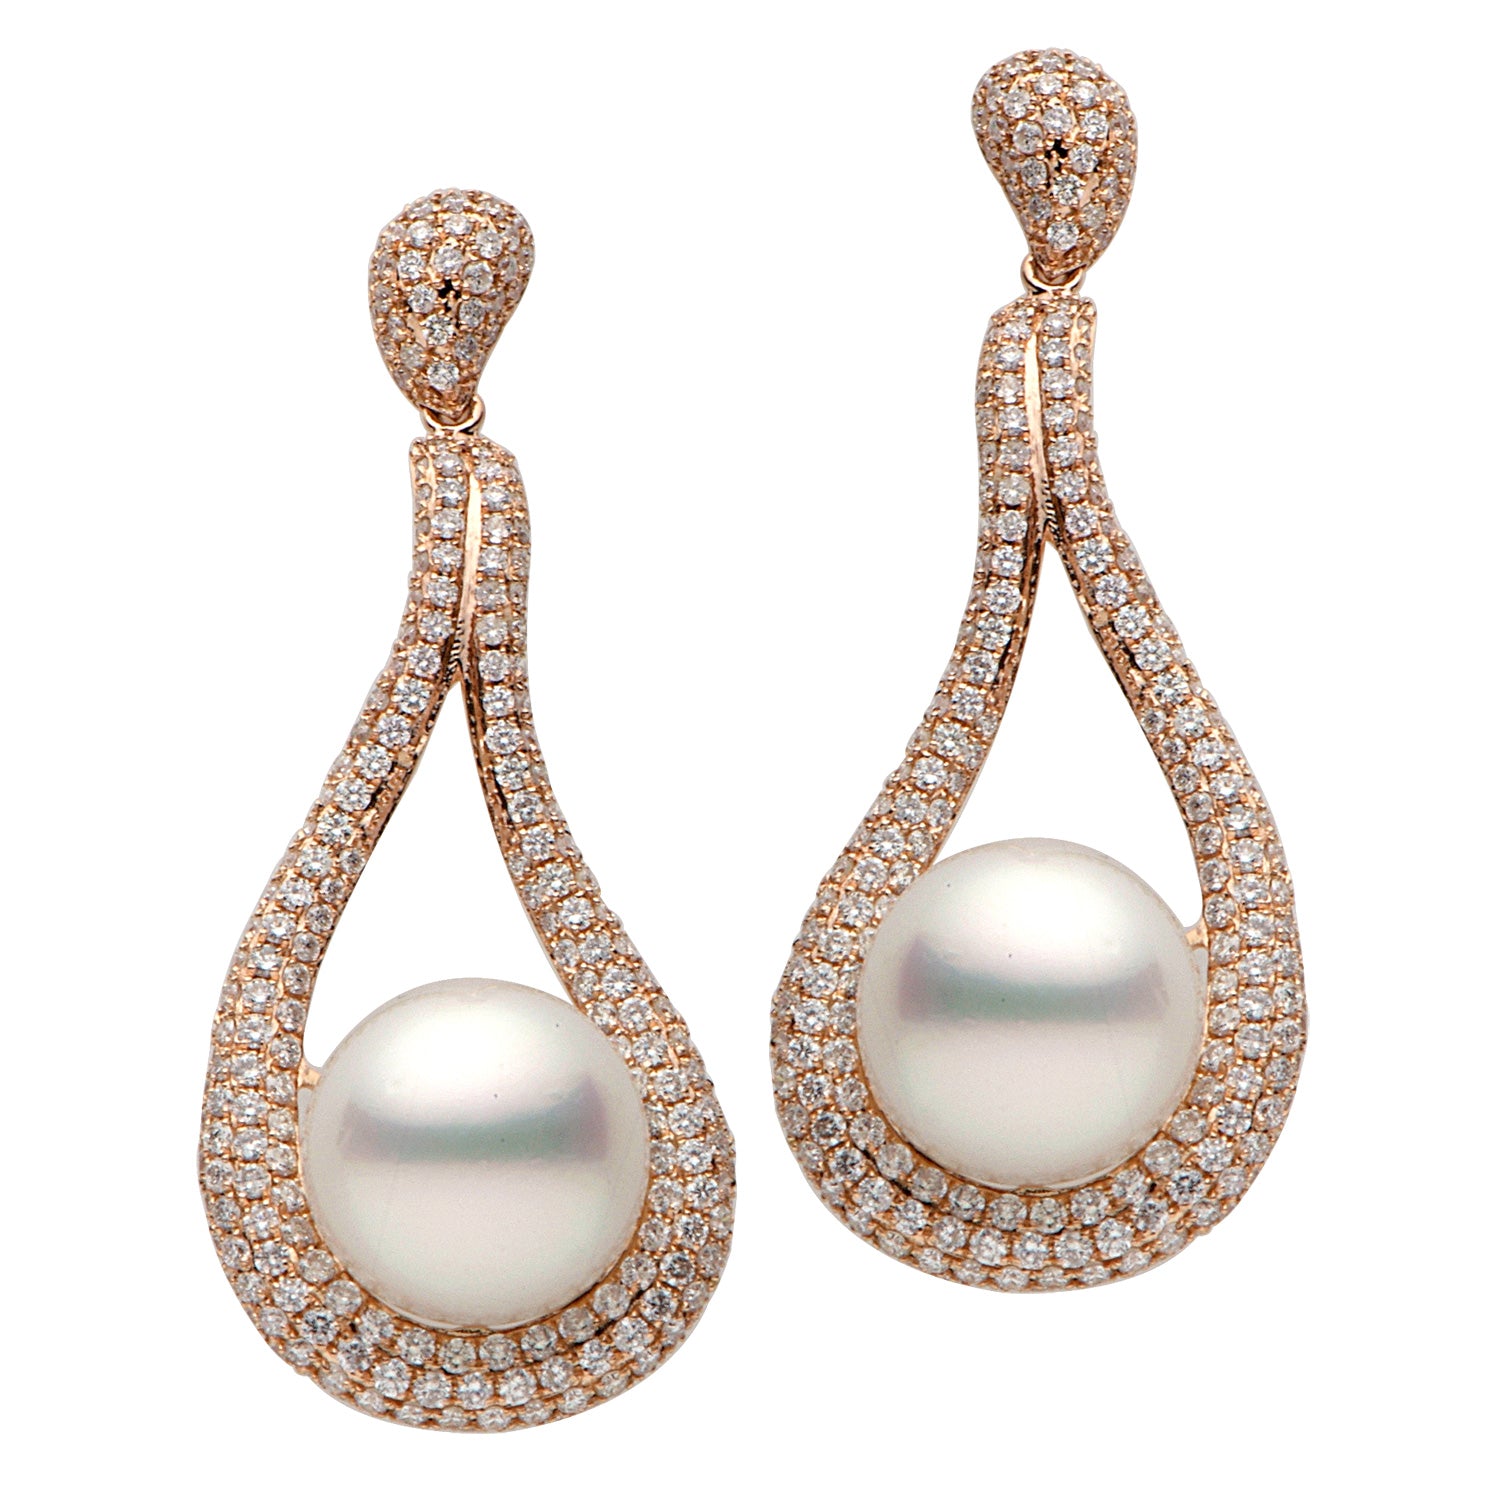 18KR White South Sea Pearl Earrings, 12-13mm